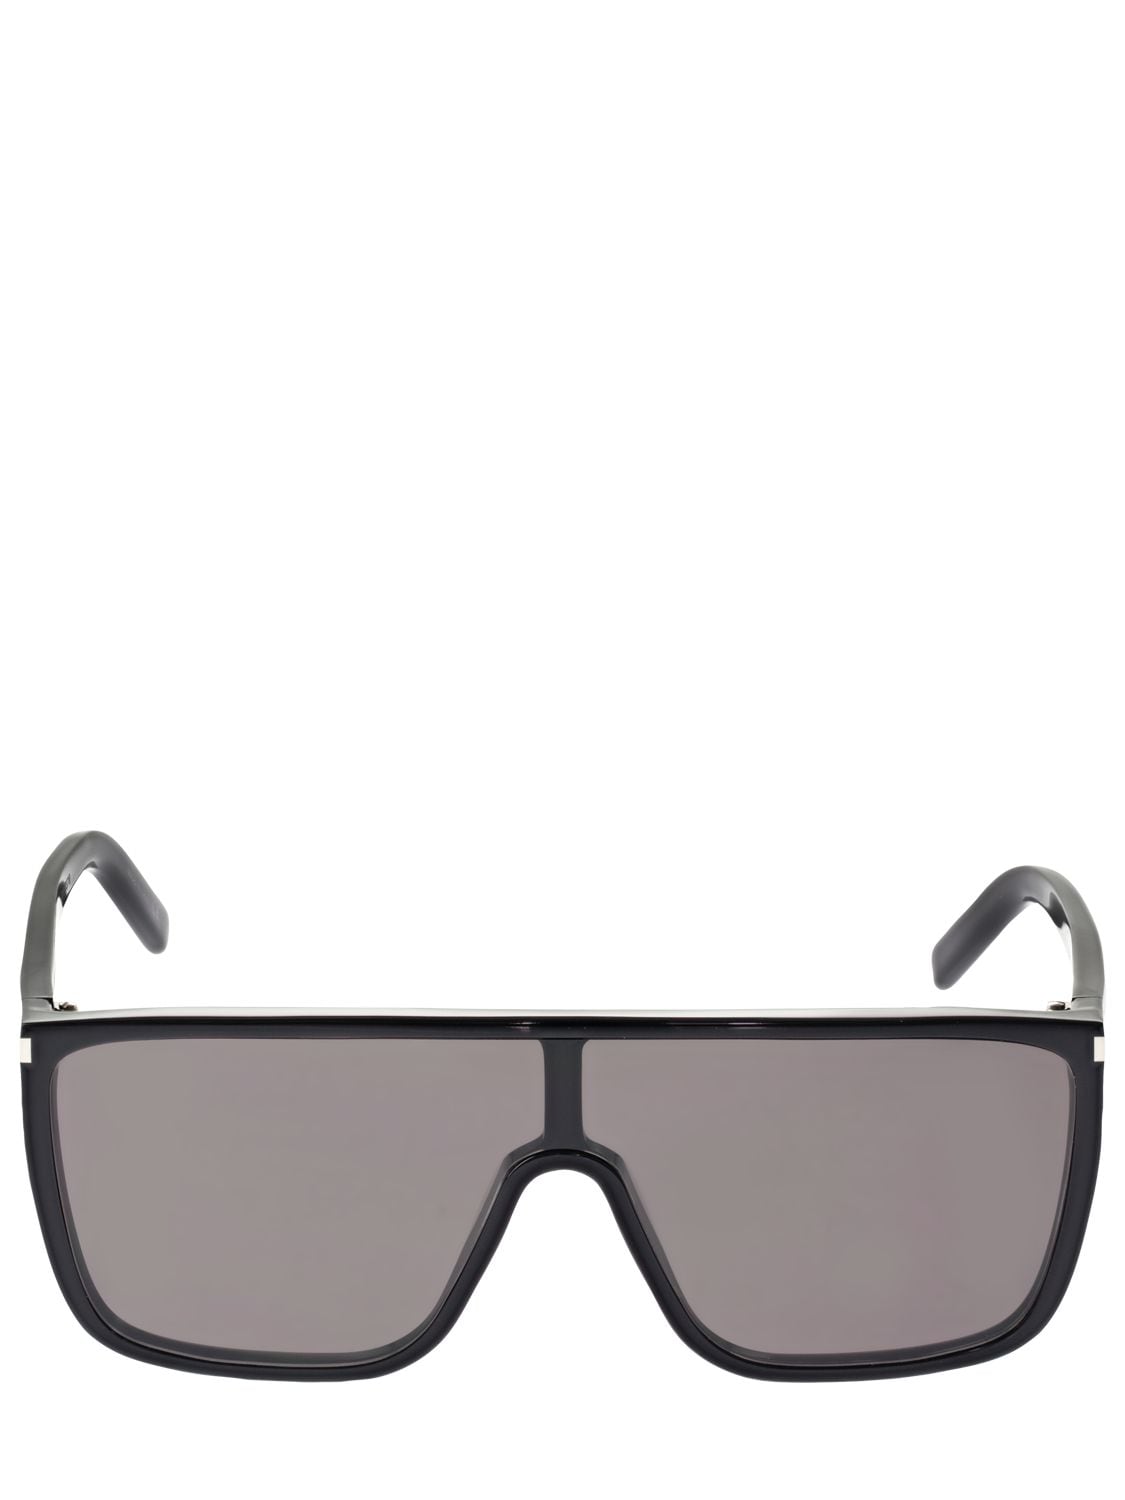 Image of Sl 364 Sunglasses